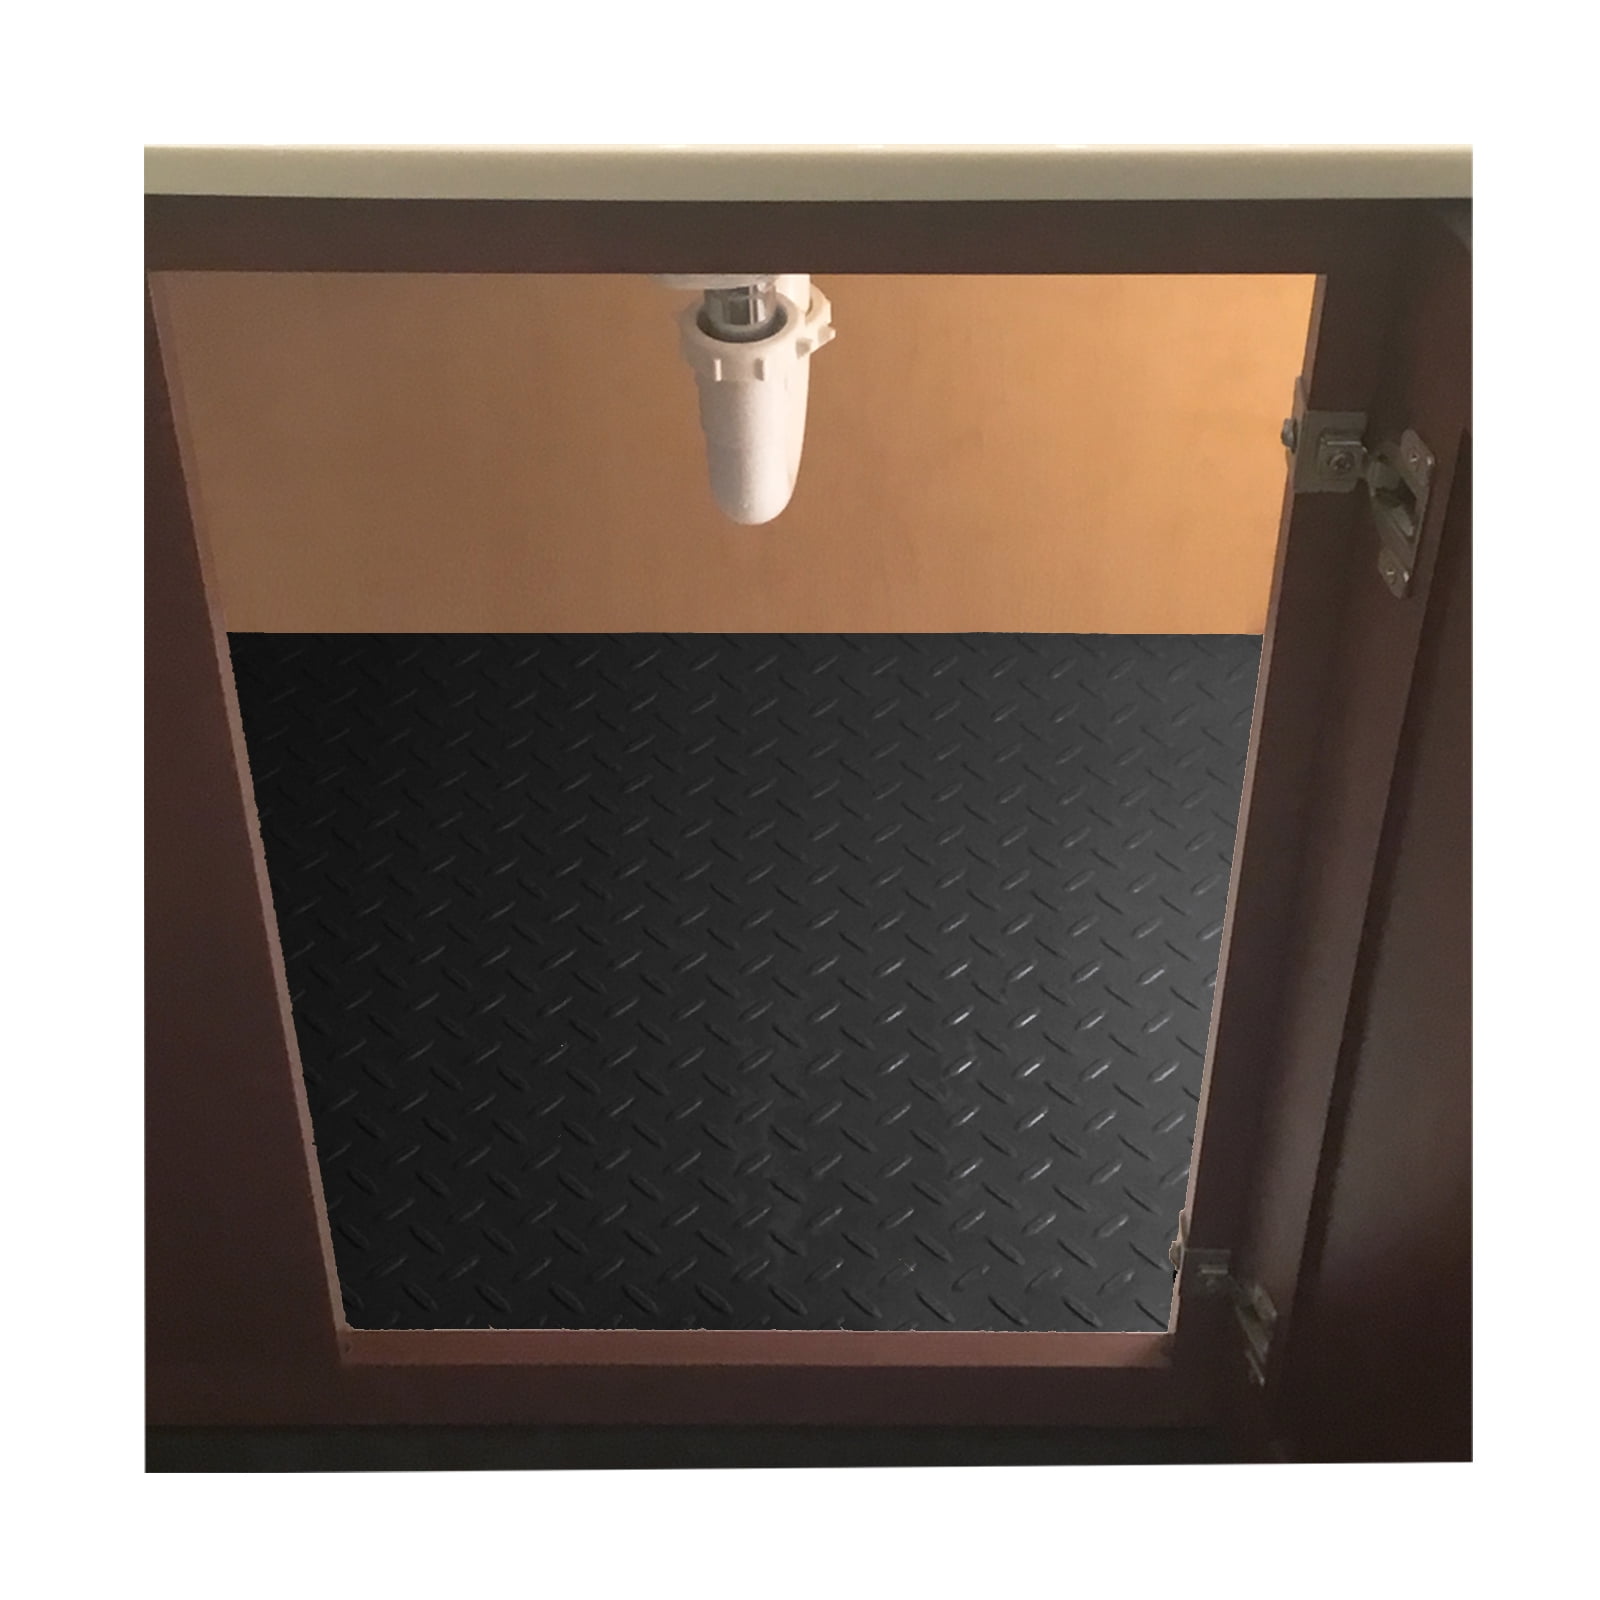 WeatherTech Sinkmat Under Bathroom Vanity Sink Cabinet Protection Mats USM02